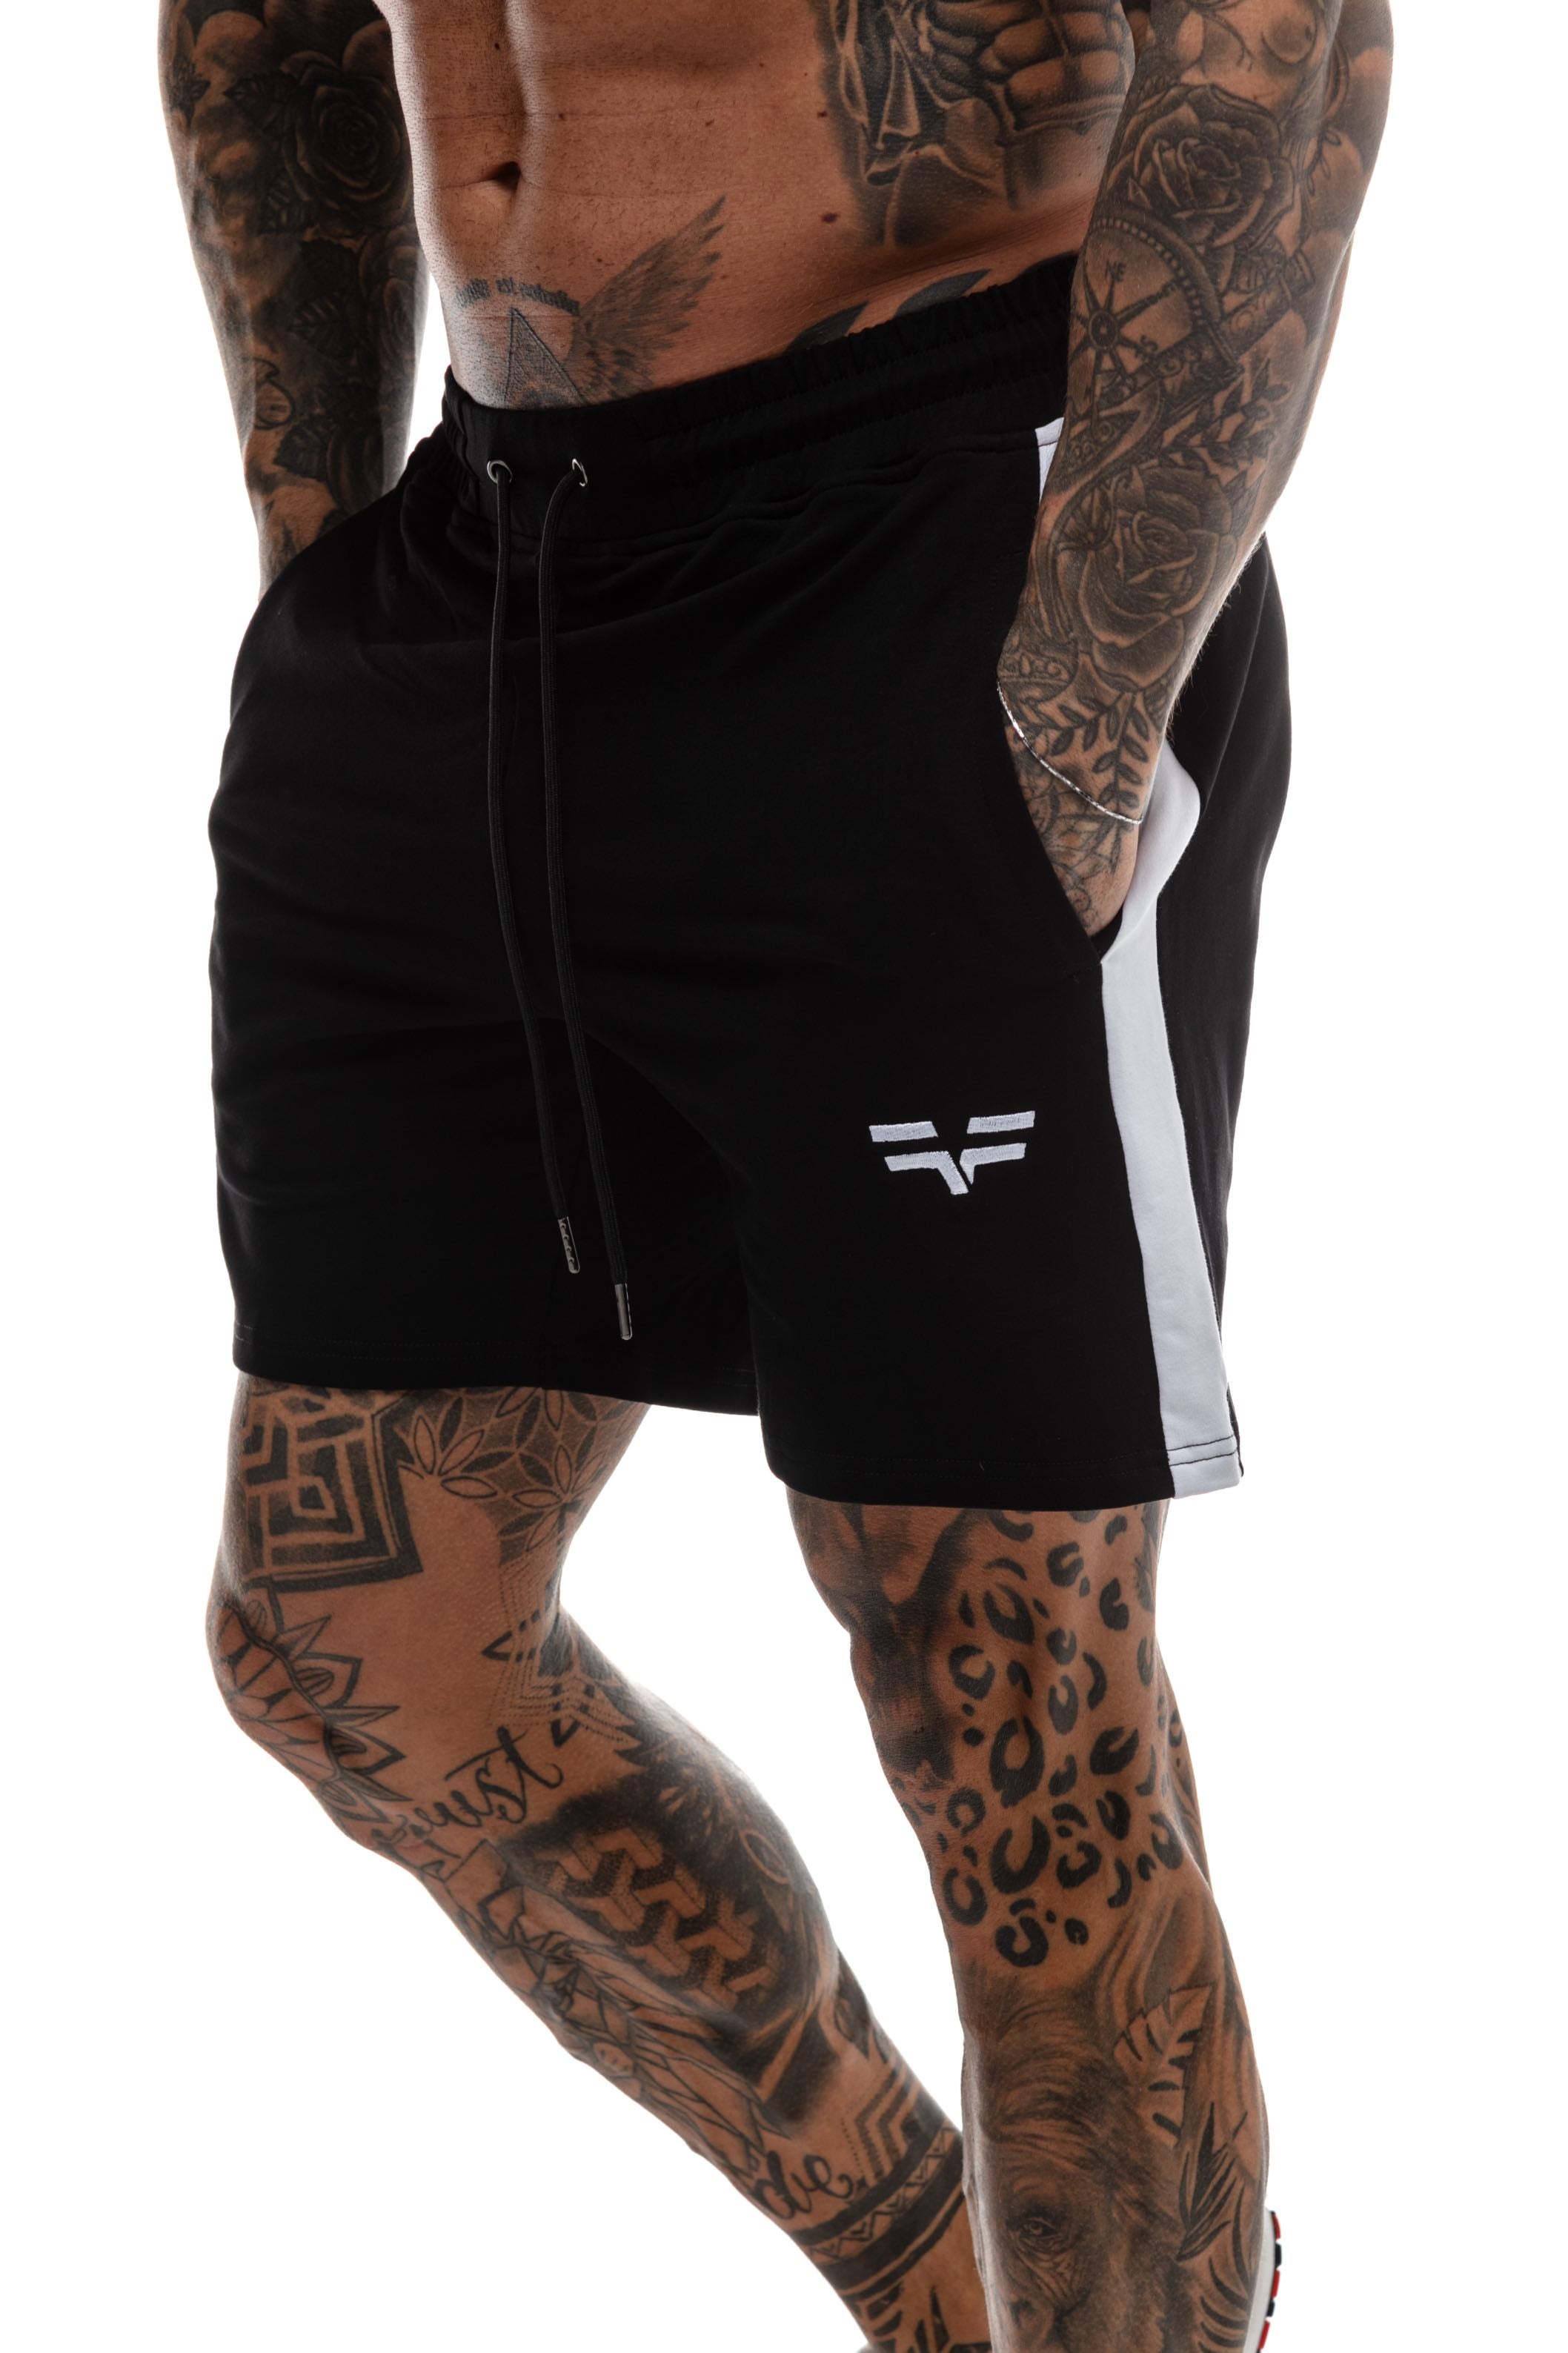 GymFreak Mens Icon Range Shorts - Black - 7 inch